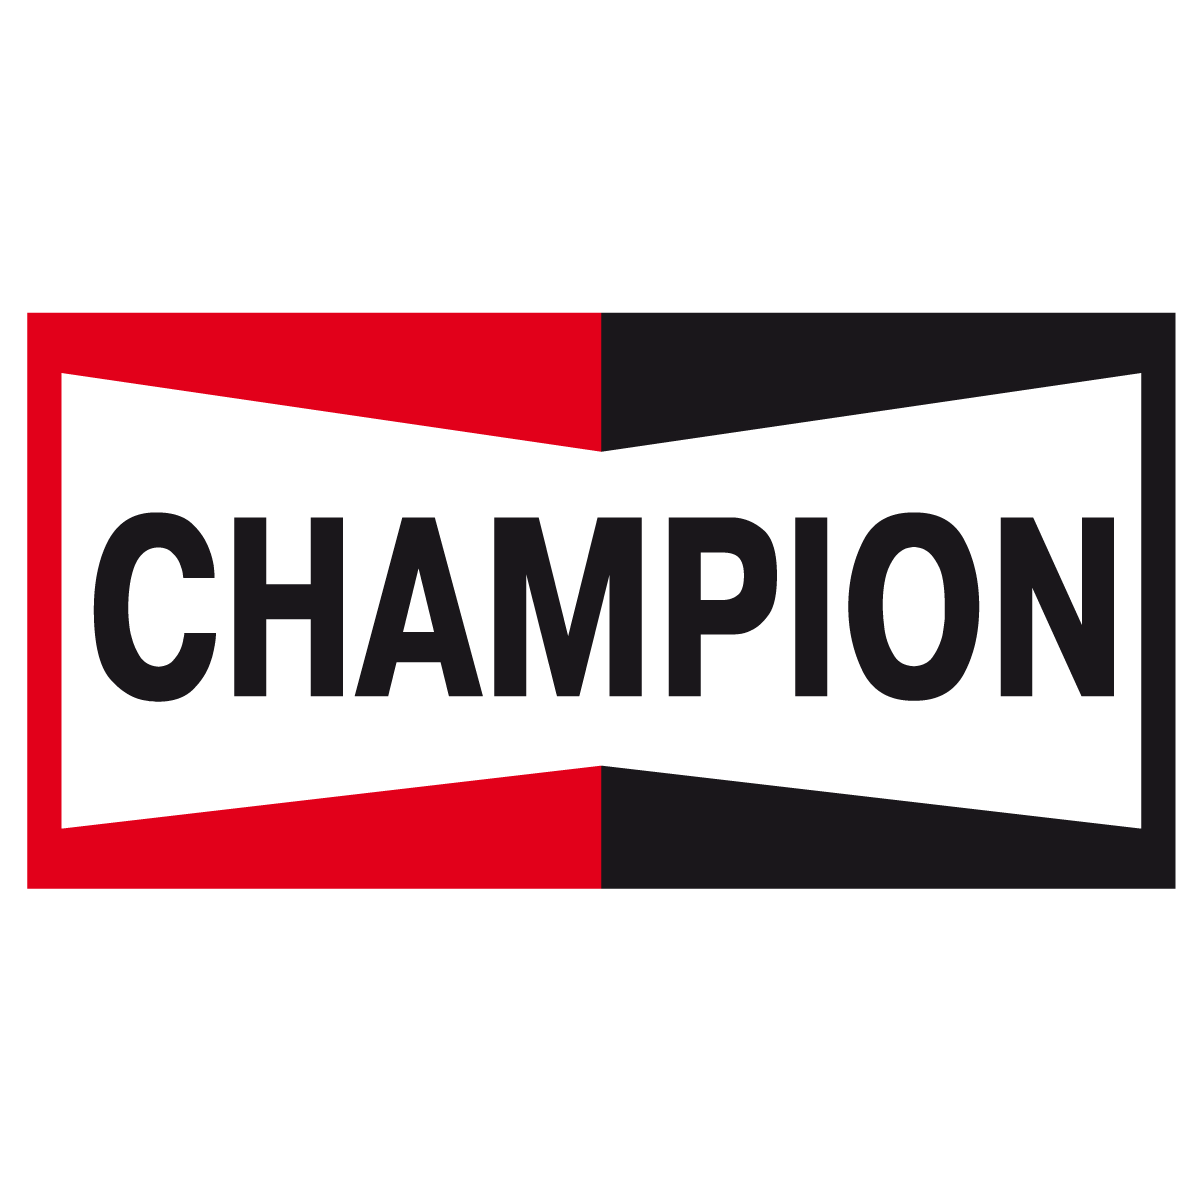 Pegatinas: Champion Motor